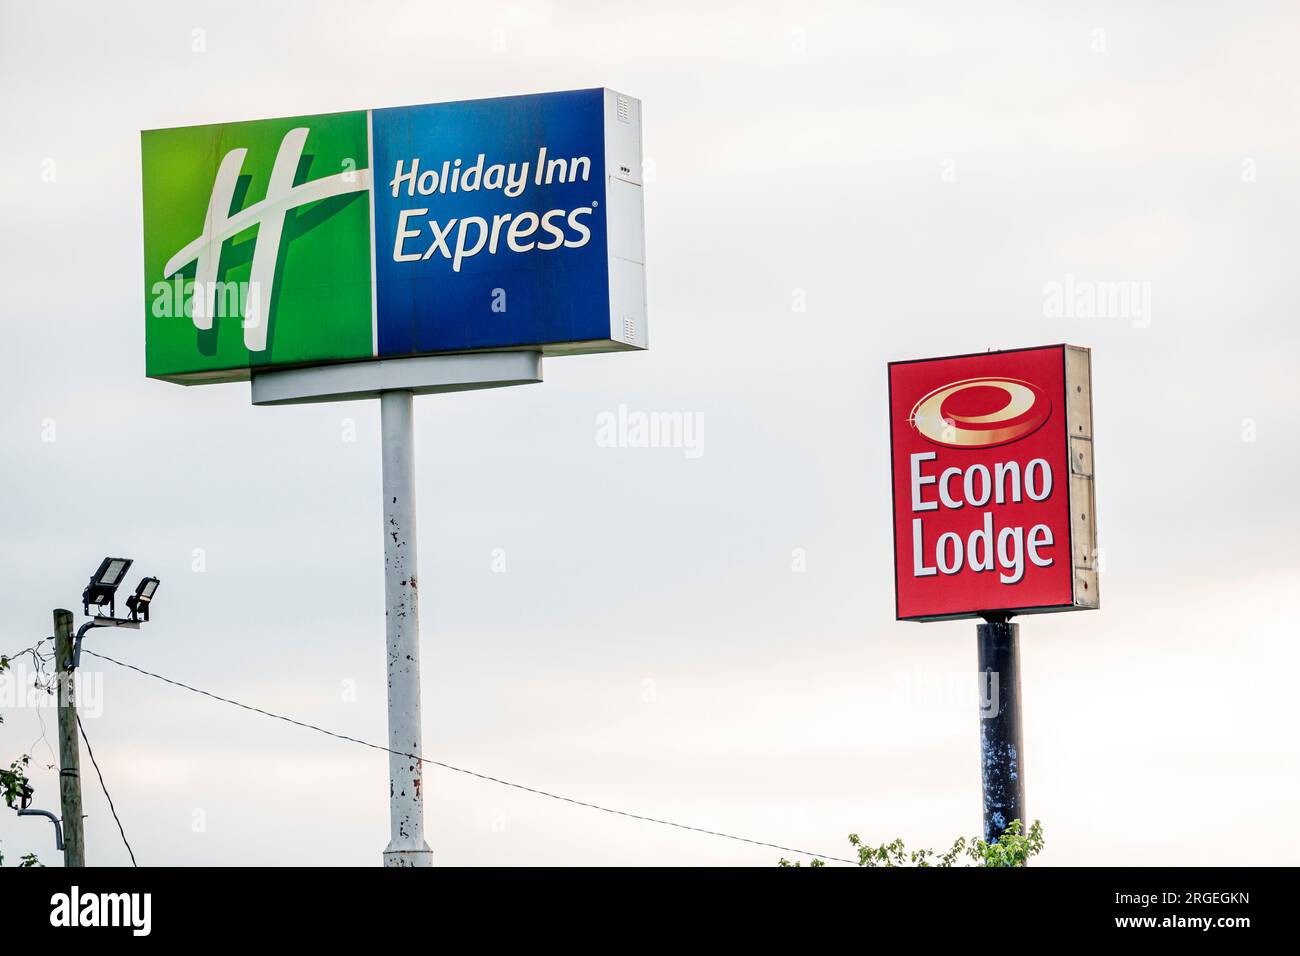 Gastonia North Carolina, alte indicazioni stradali, Holiday Inn Express, Econo Lodge Foto Stock